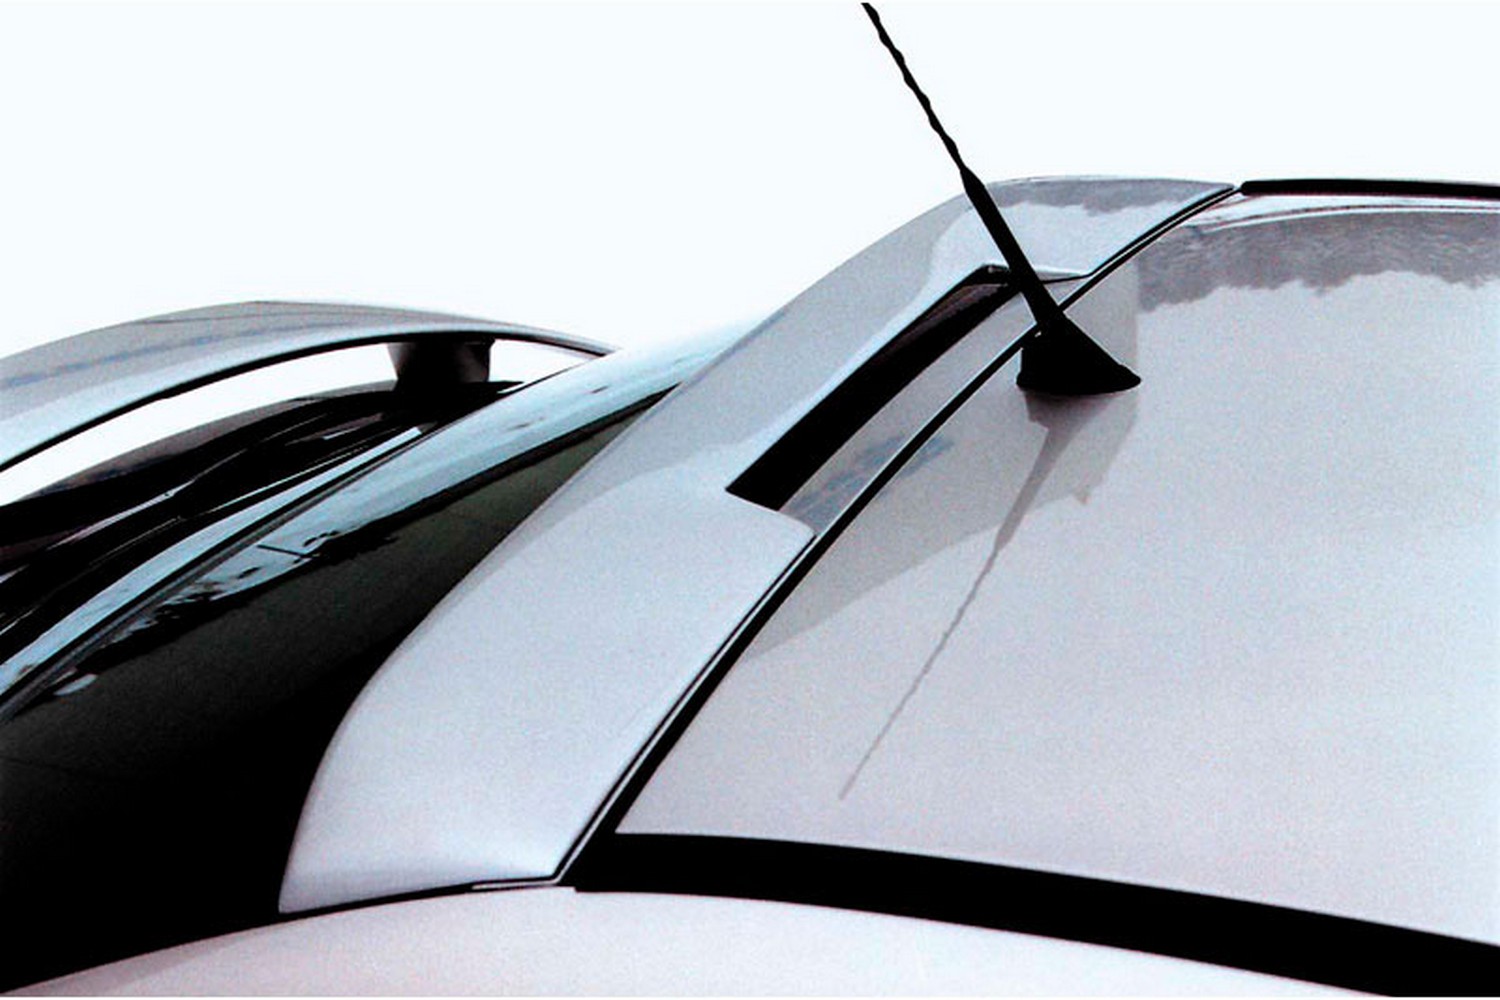 Dachspoiler Heckspoiler Flügel Heckflügel für Opel Astra G 1998-2004 G